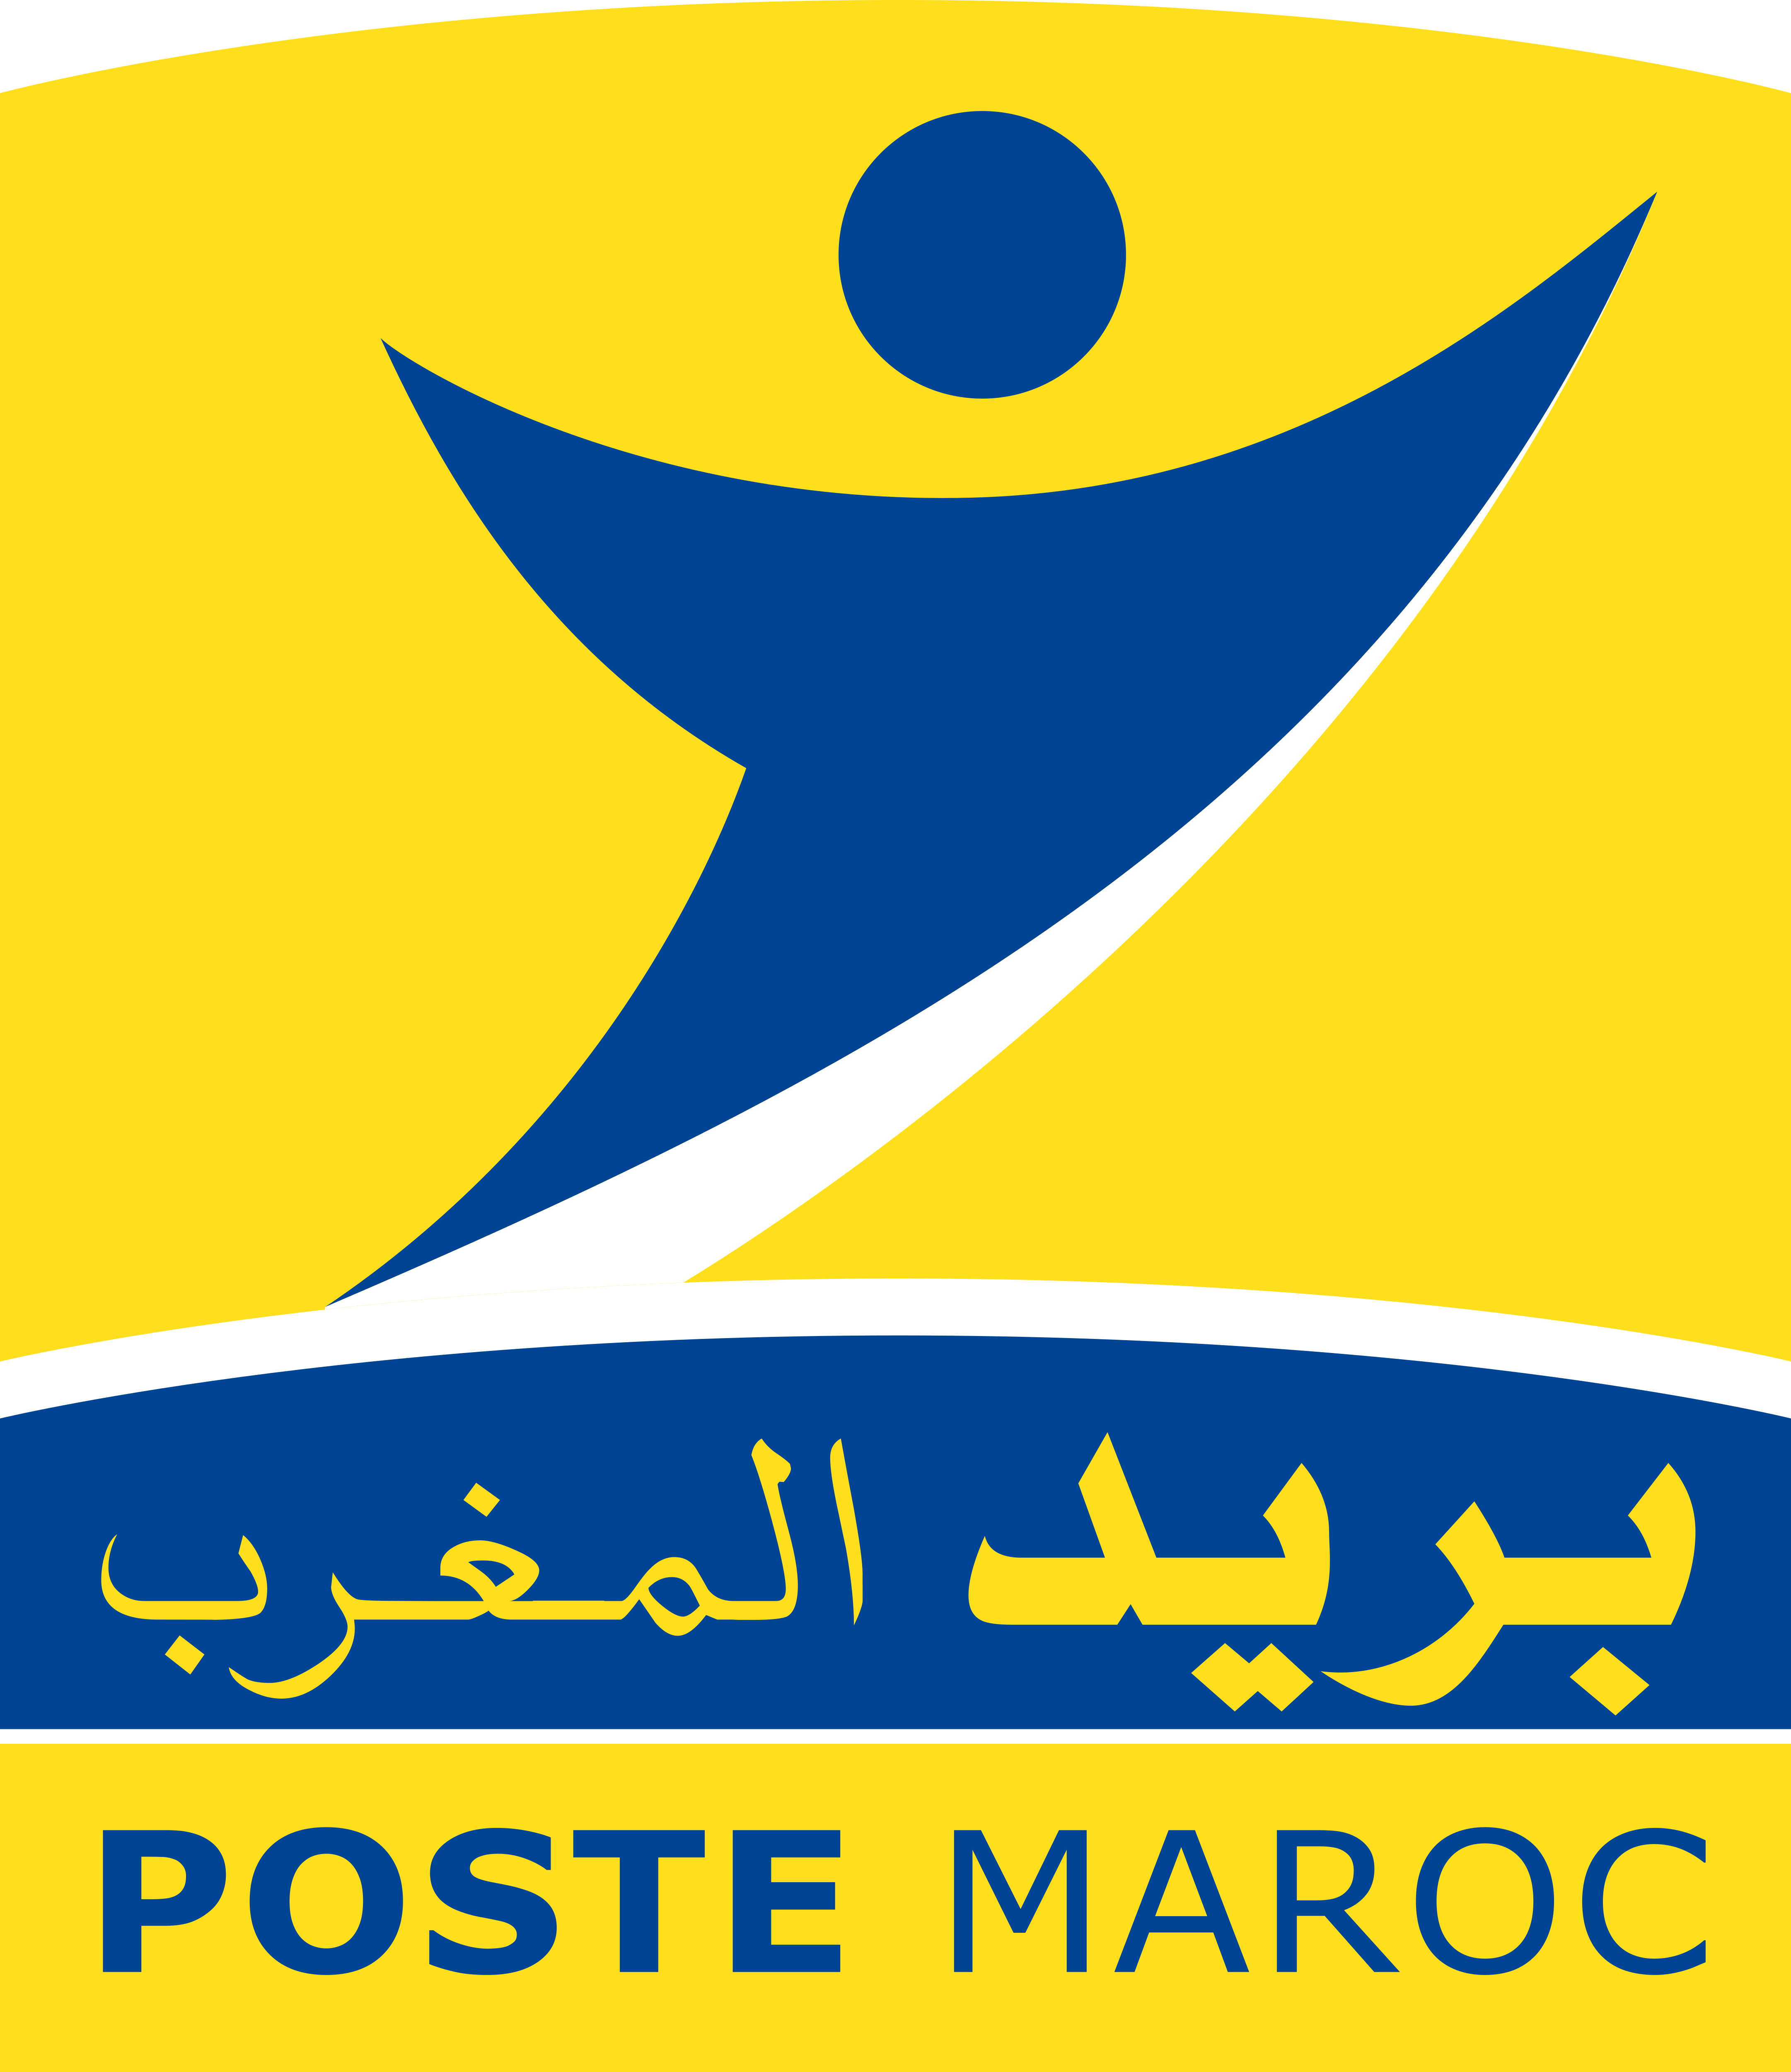 Poste Maroc logo, logotype